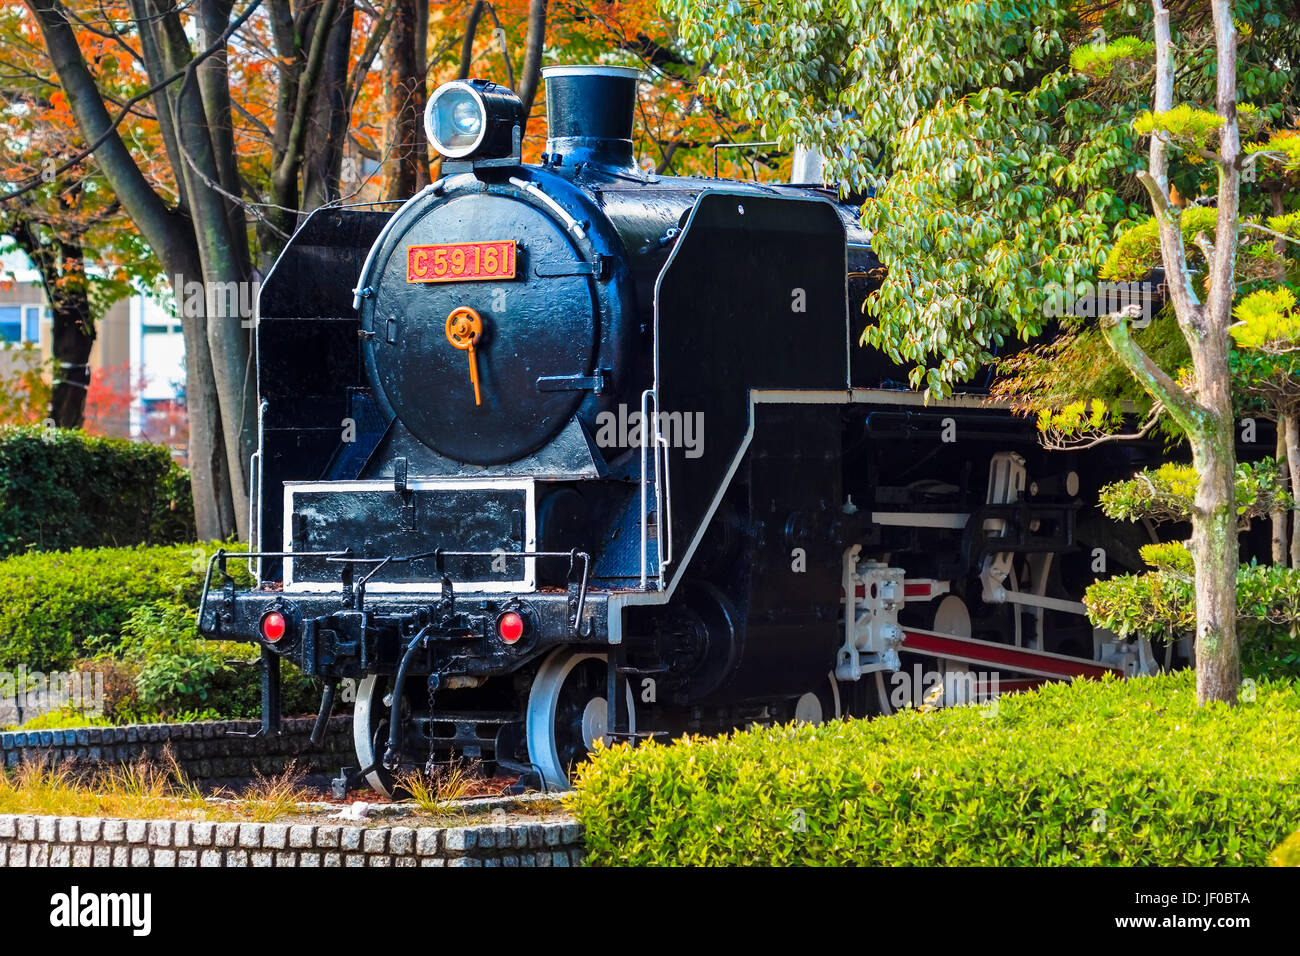 A Steam locomotive at Hiroshima Children's Museum in Hiroshima, Japan Stock Photo